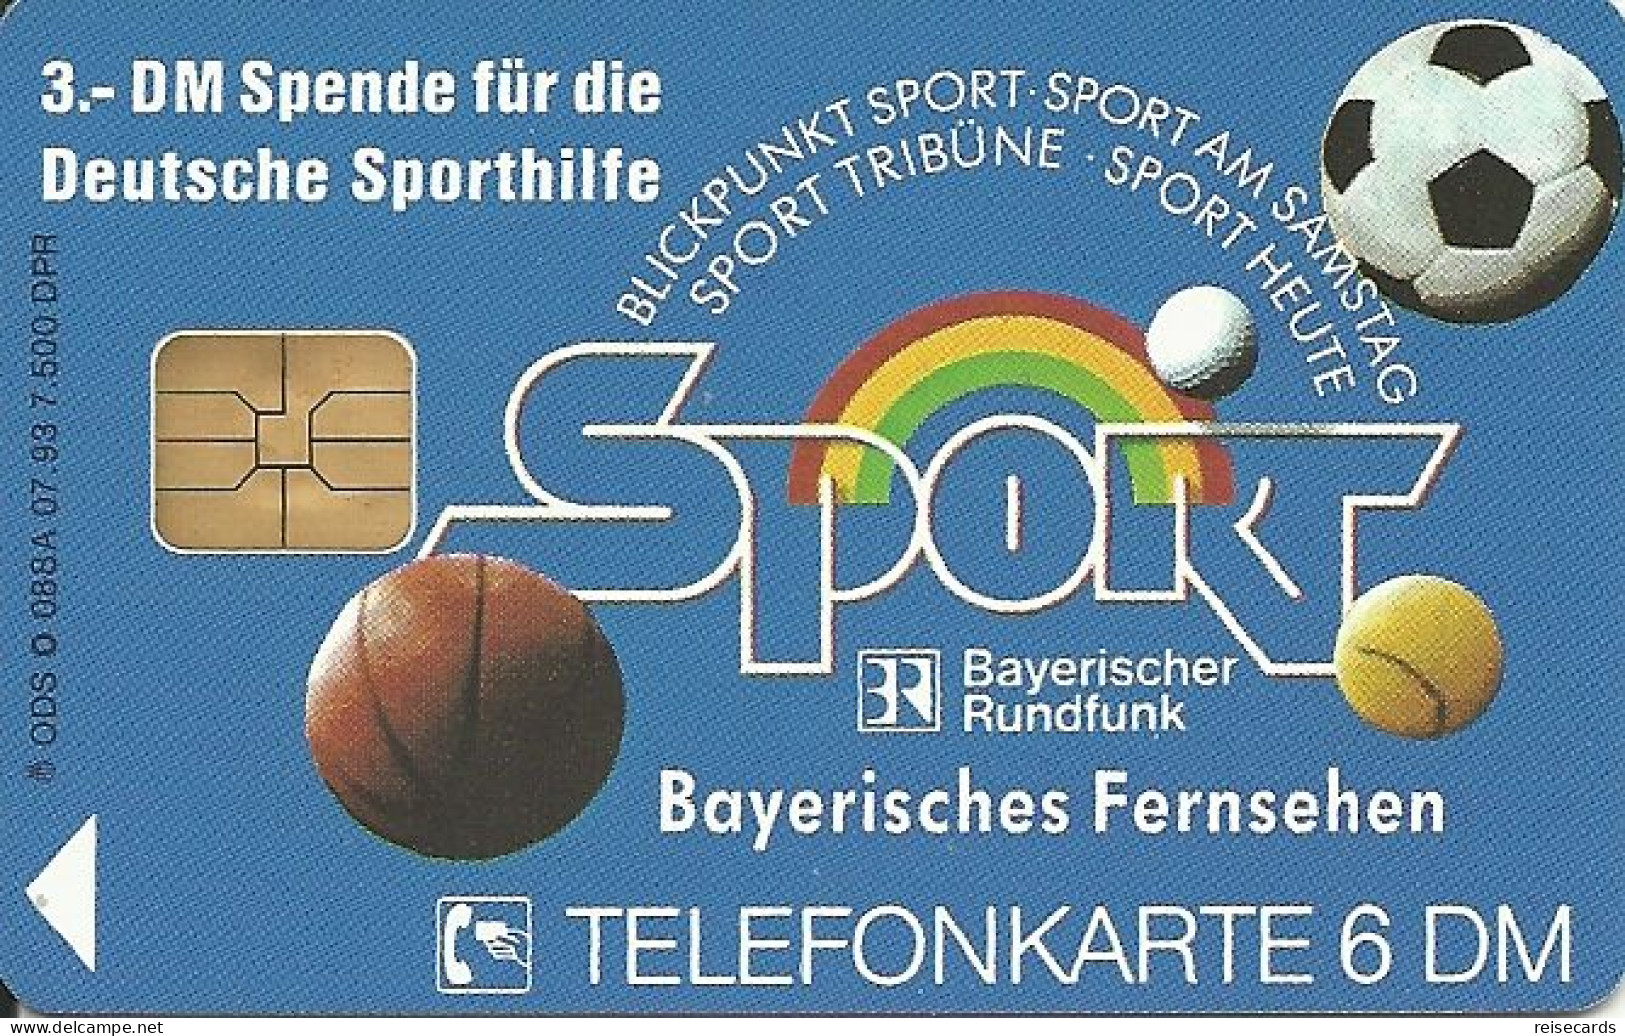 Germany: O 088 A 07.93 Bayerisches Fernsehen - Sport Fussball. Mint - K-Reeksen : Reeks Klanten